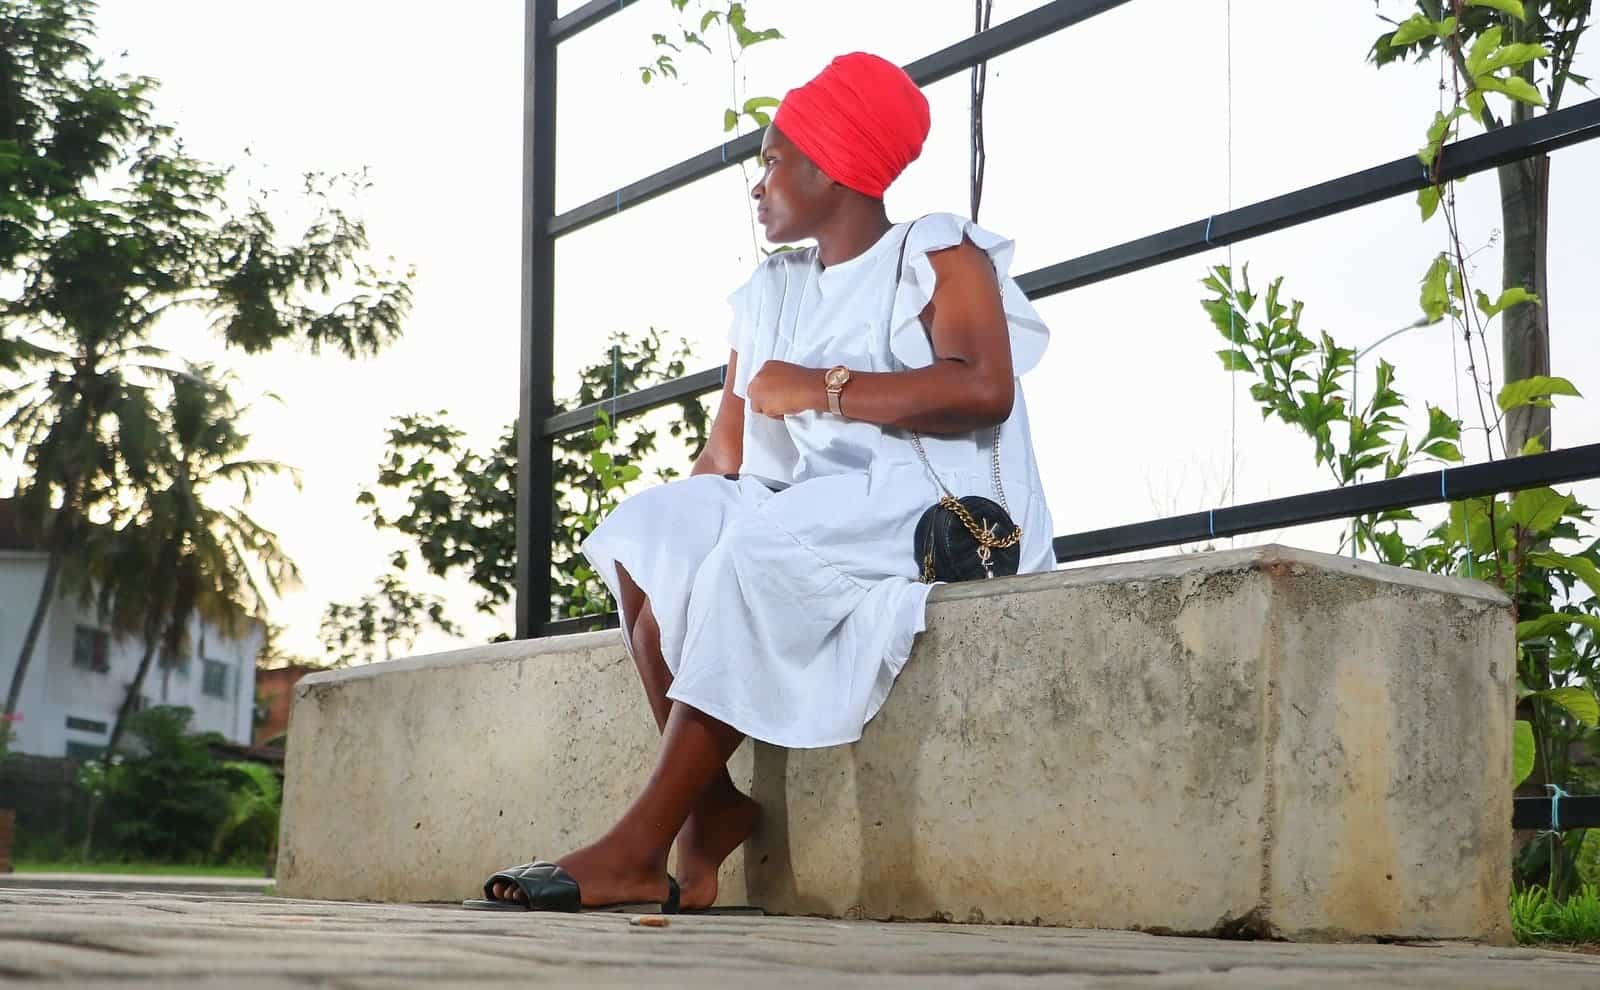 donna in costa d'avorio seduta su una panchina